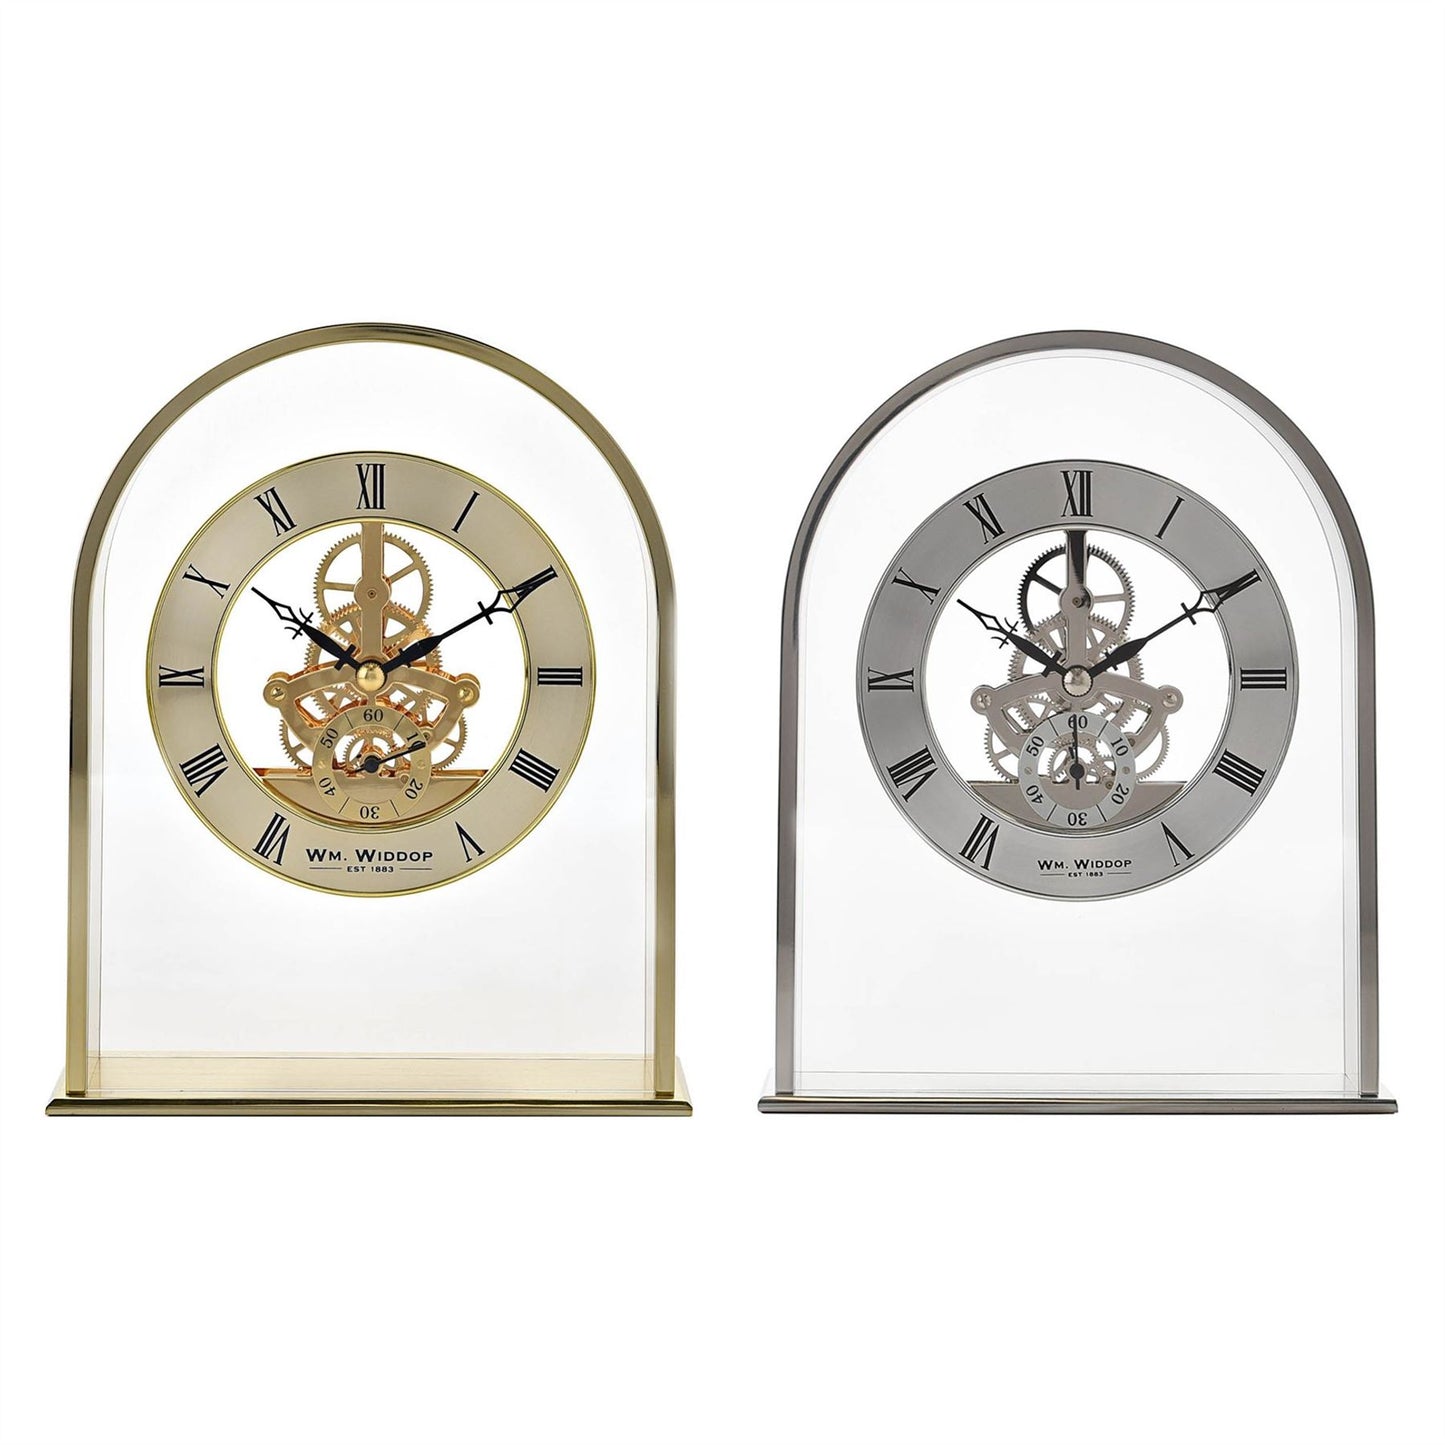 Wm.Widdop Arch Mantel Clock Skeleton Dial Roman W2028 Available Multiple Colour